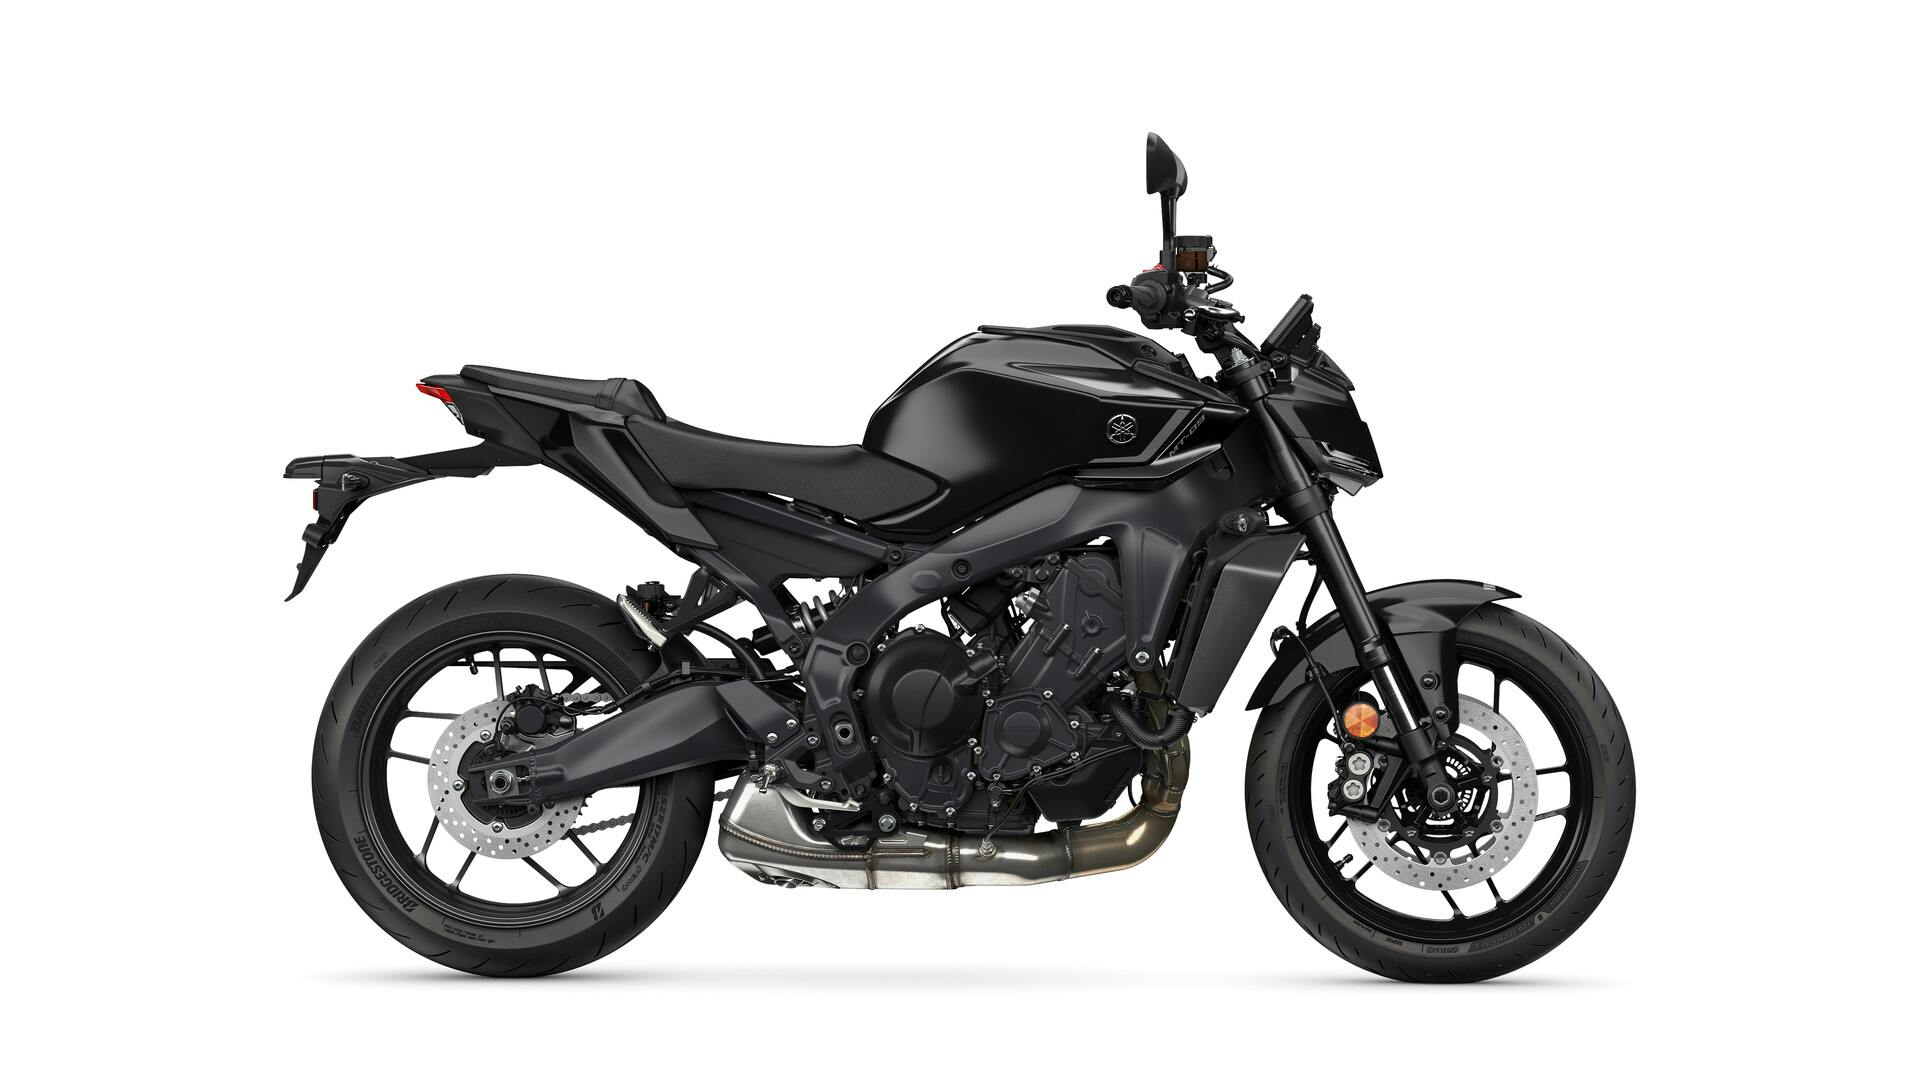 Yamaha MT-09 in tech black colour